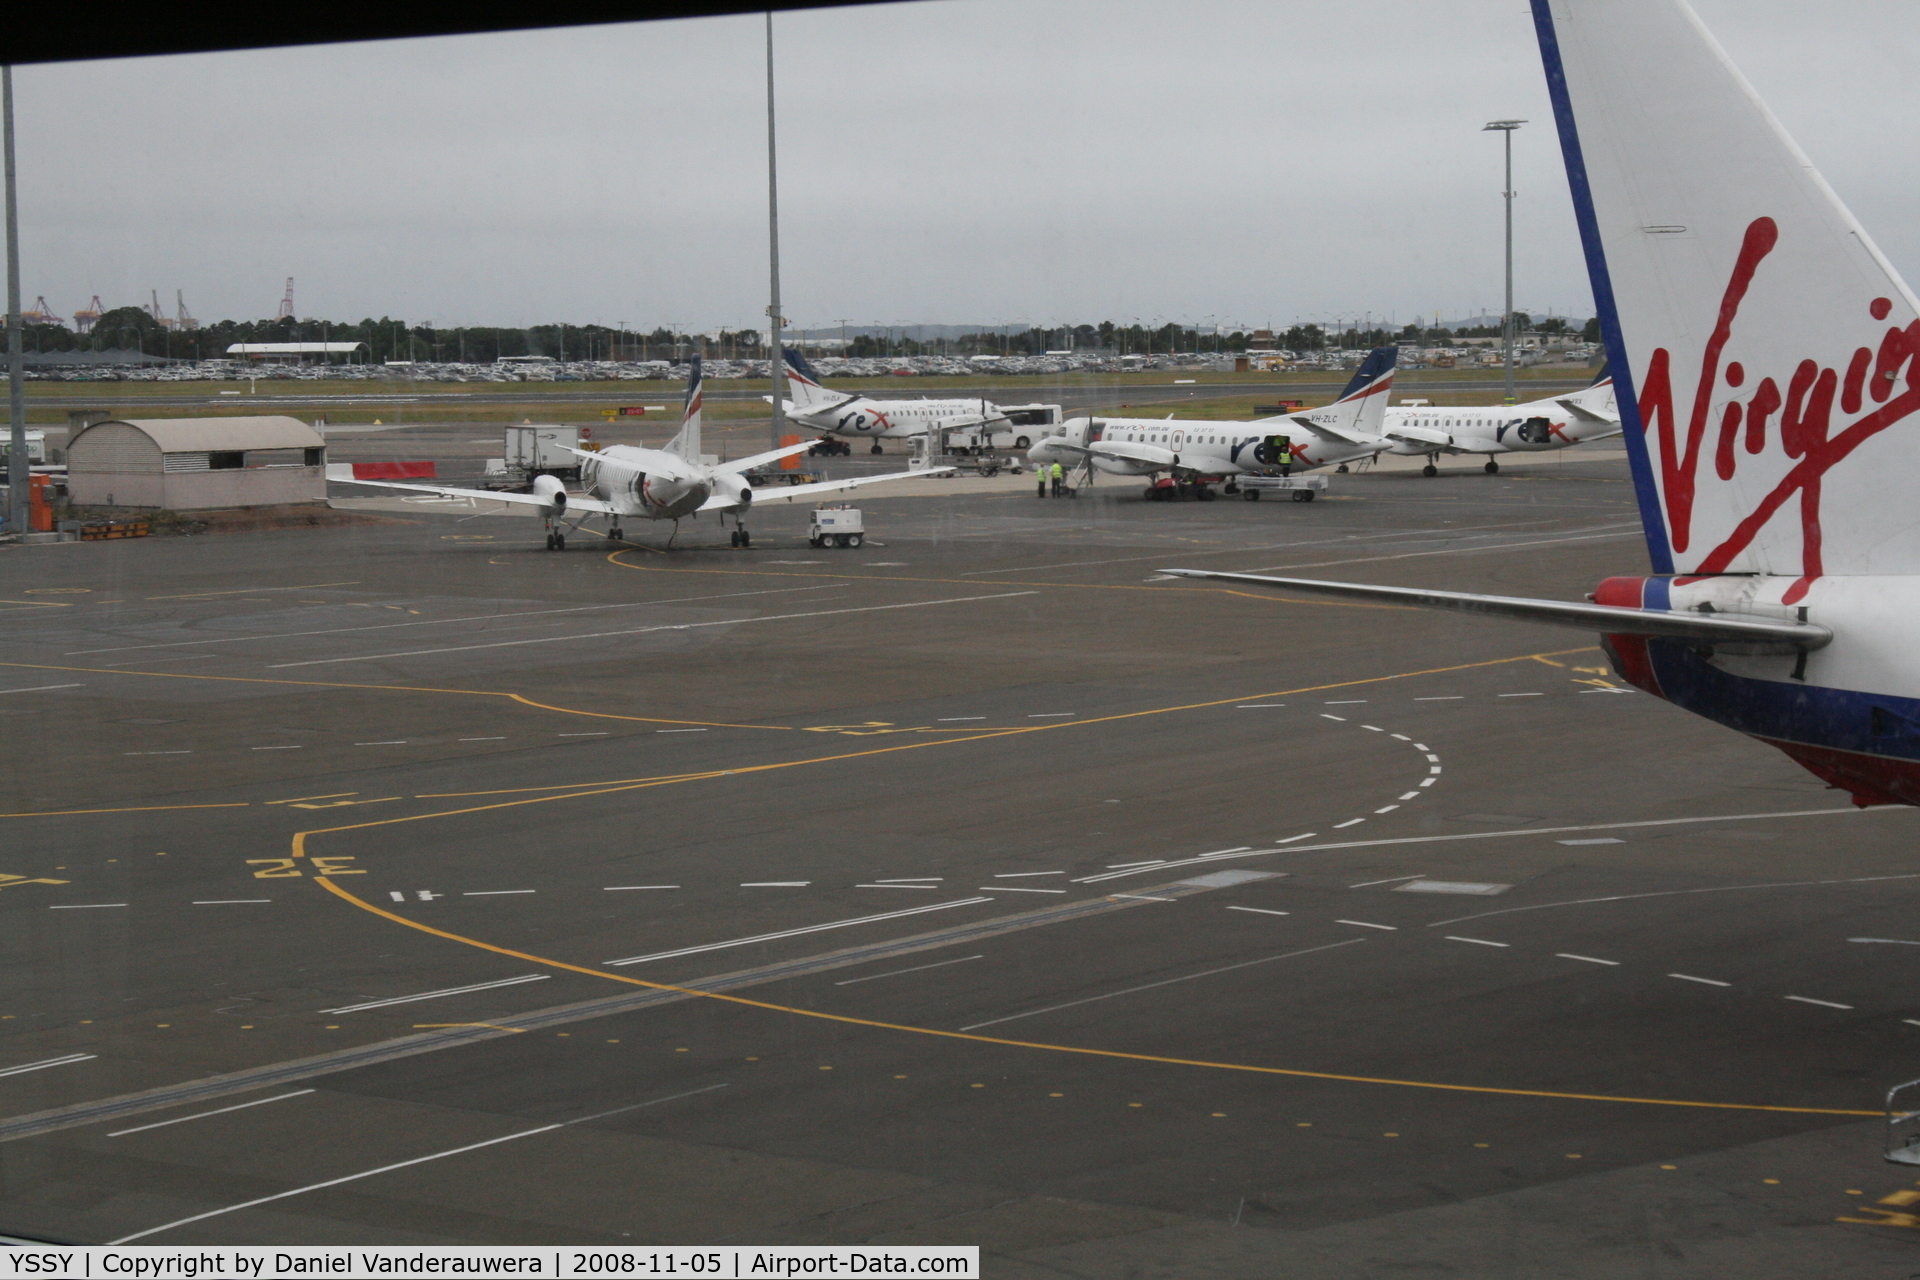 Sydney Airport, Mascot, New South Wales Australia (YSSY) - REX /Regional Express apron - from left to right: VH-ZL? - VH-ZLK - VH-ZLC - VH-YRX